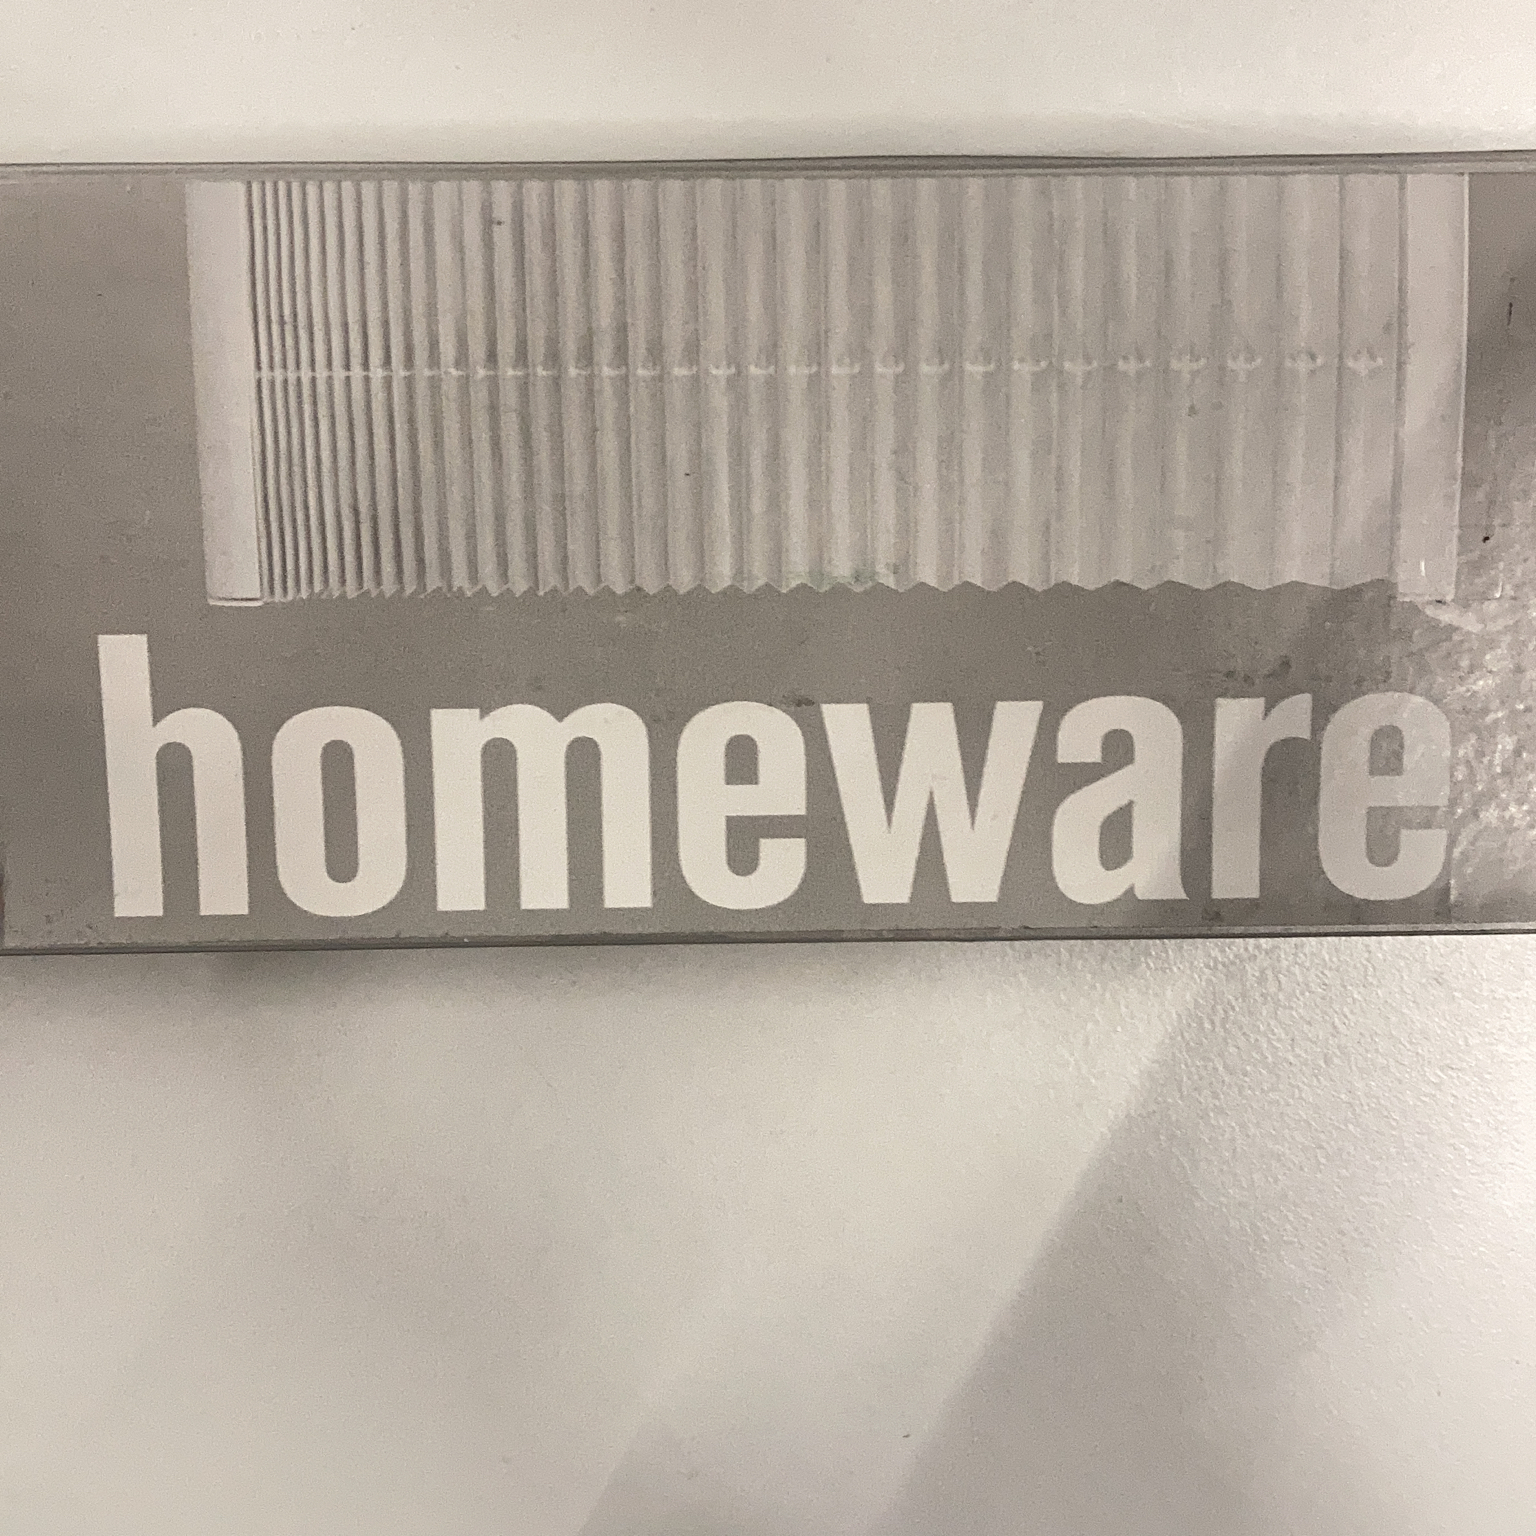 Homeware